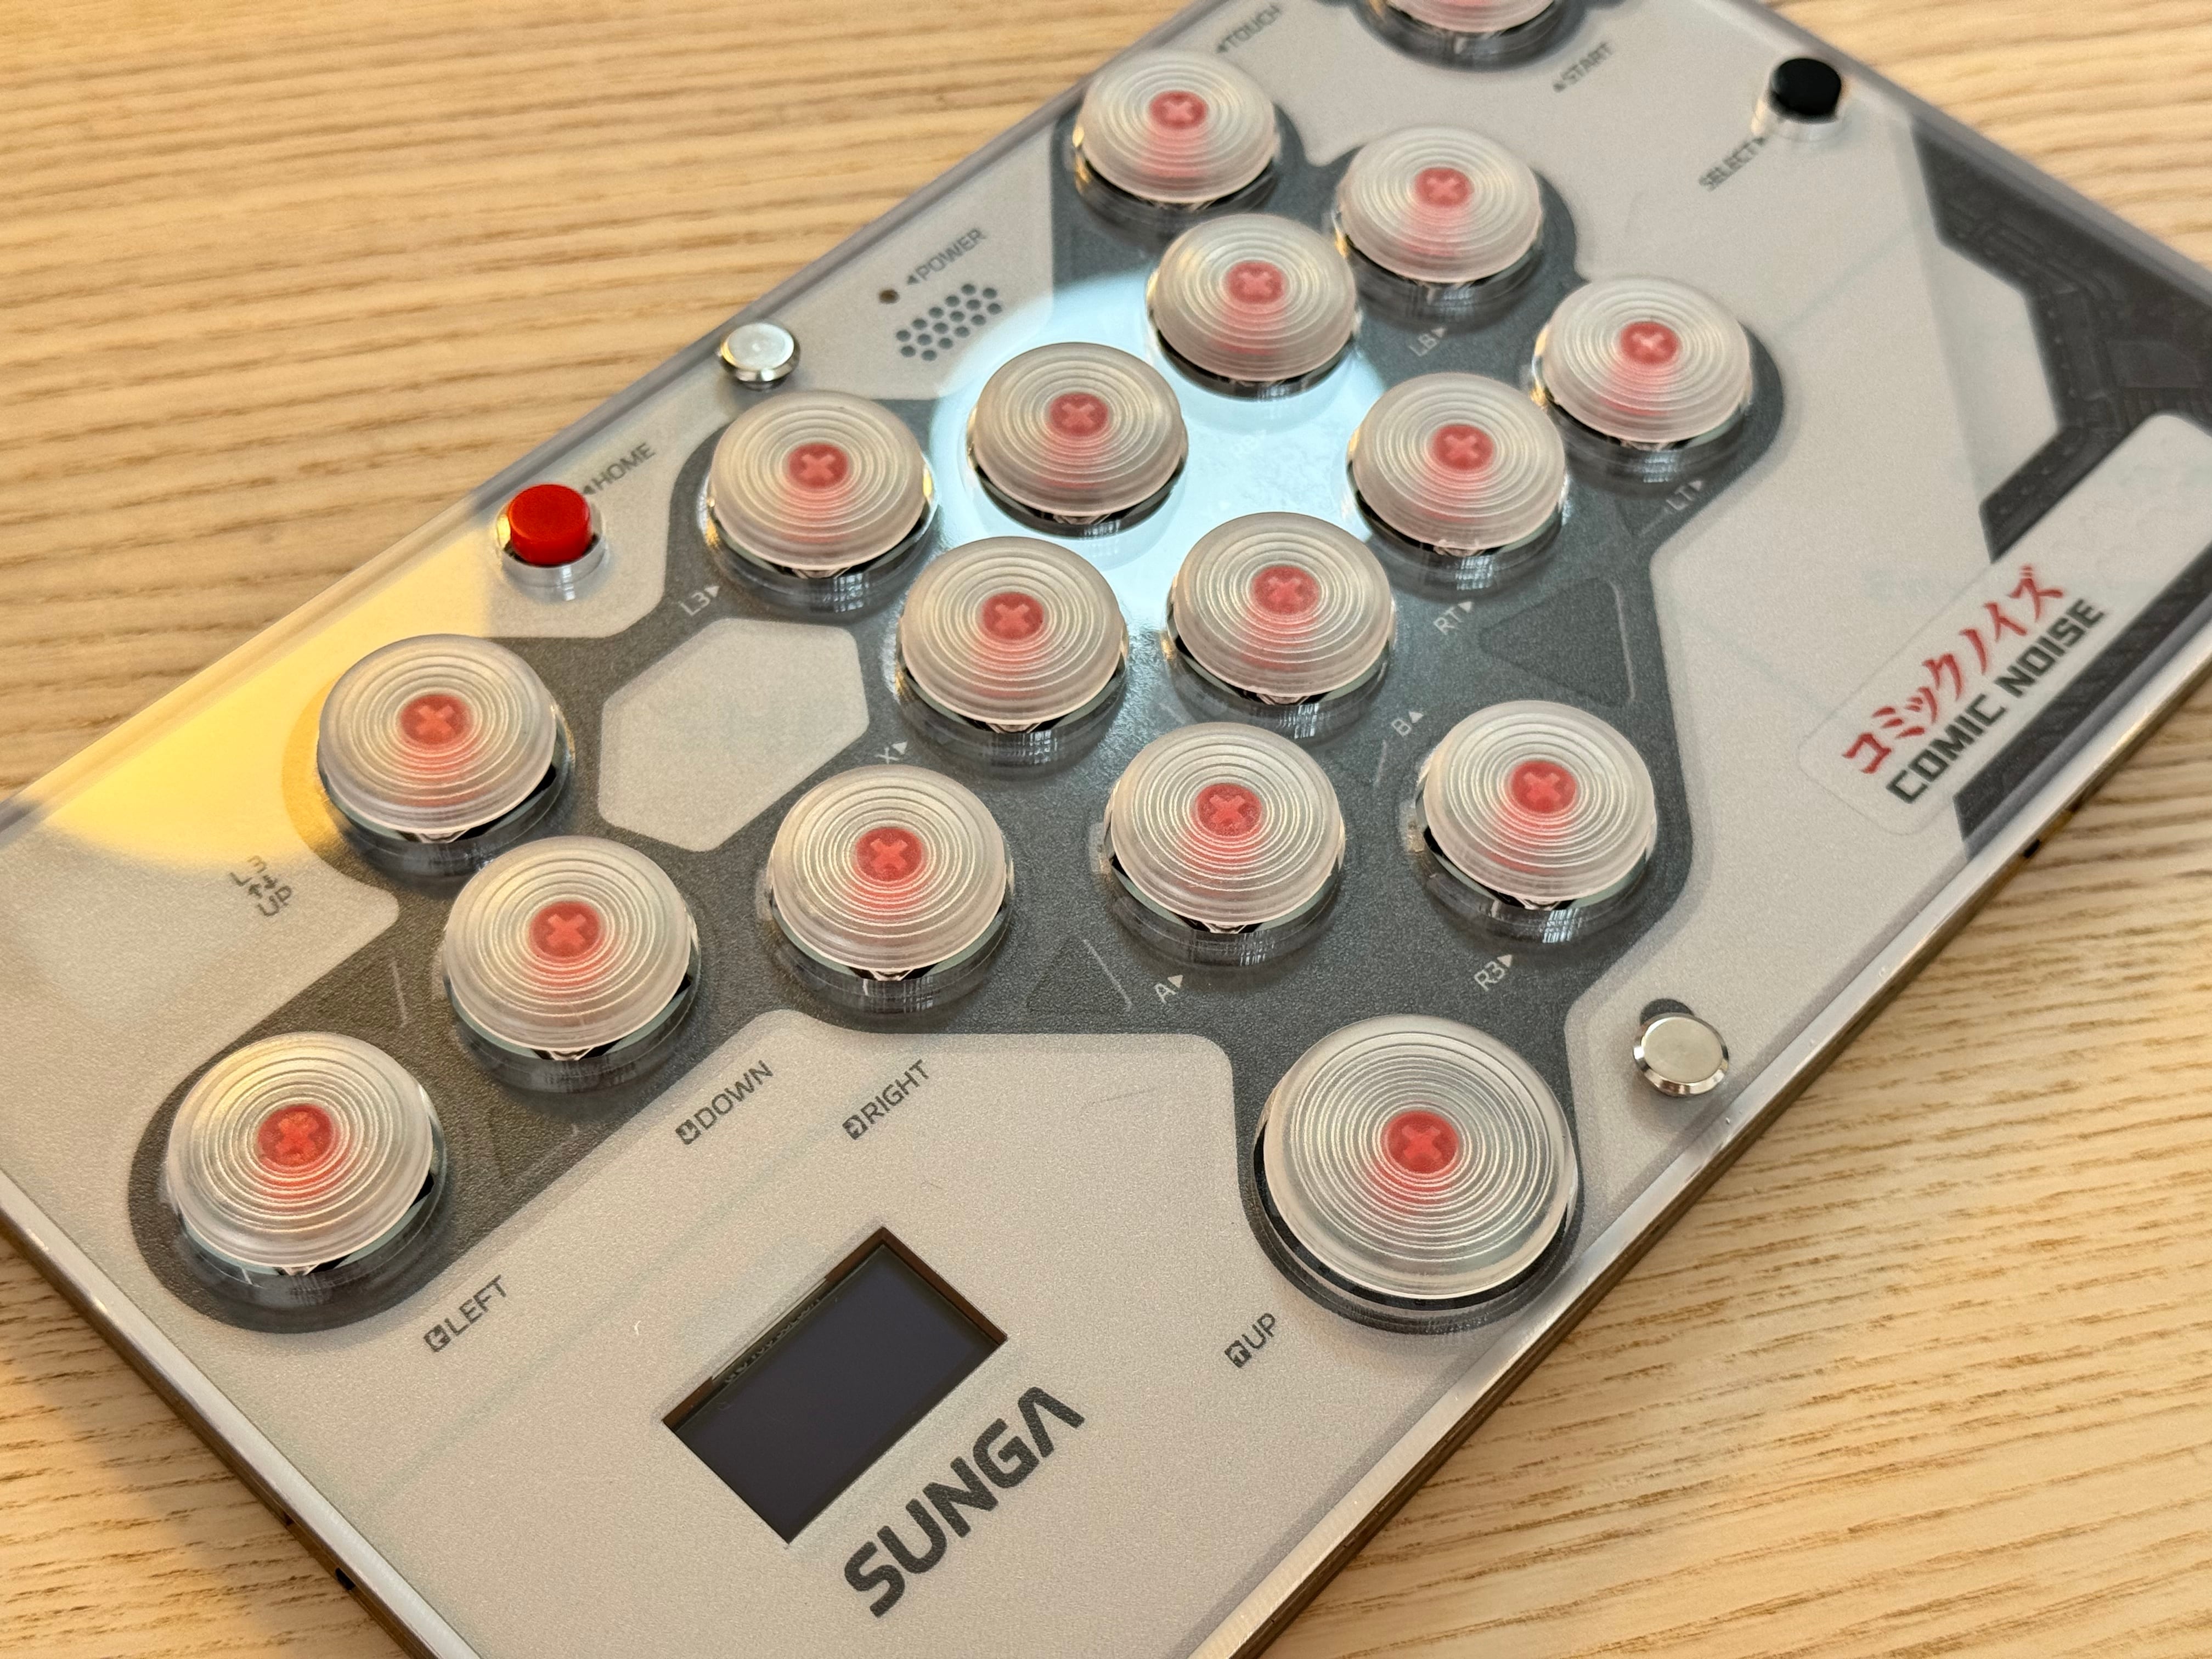 SUNGA 17 Buttonsレバーレスコントローラー - beautifulbooze.com